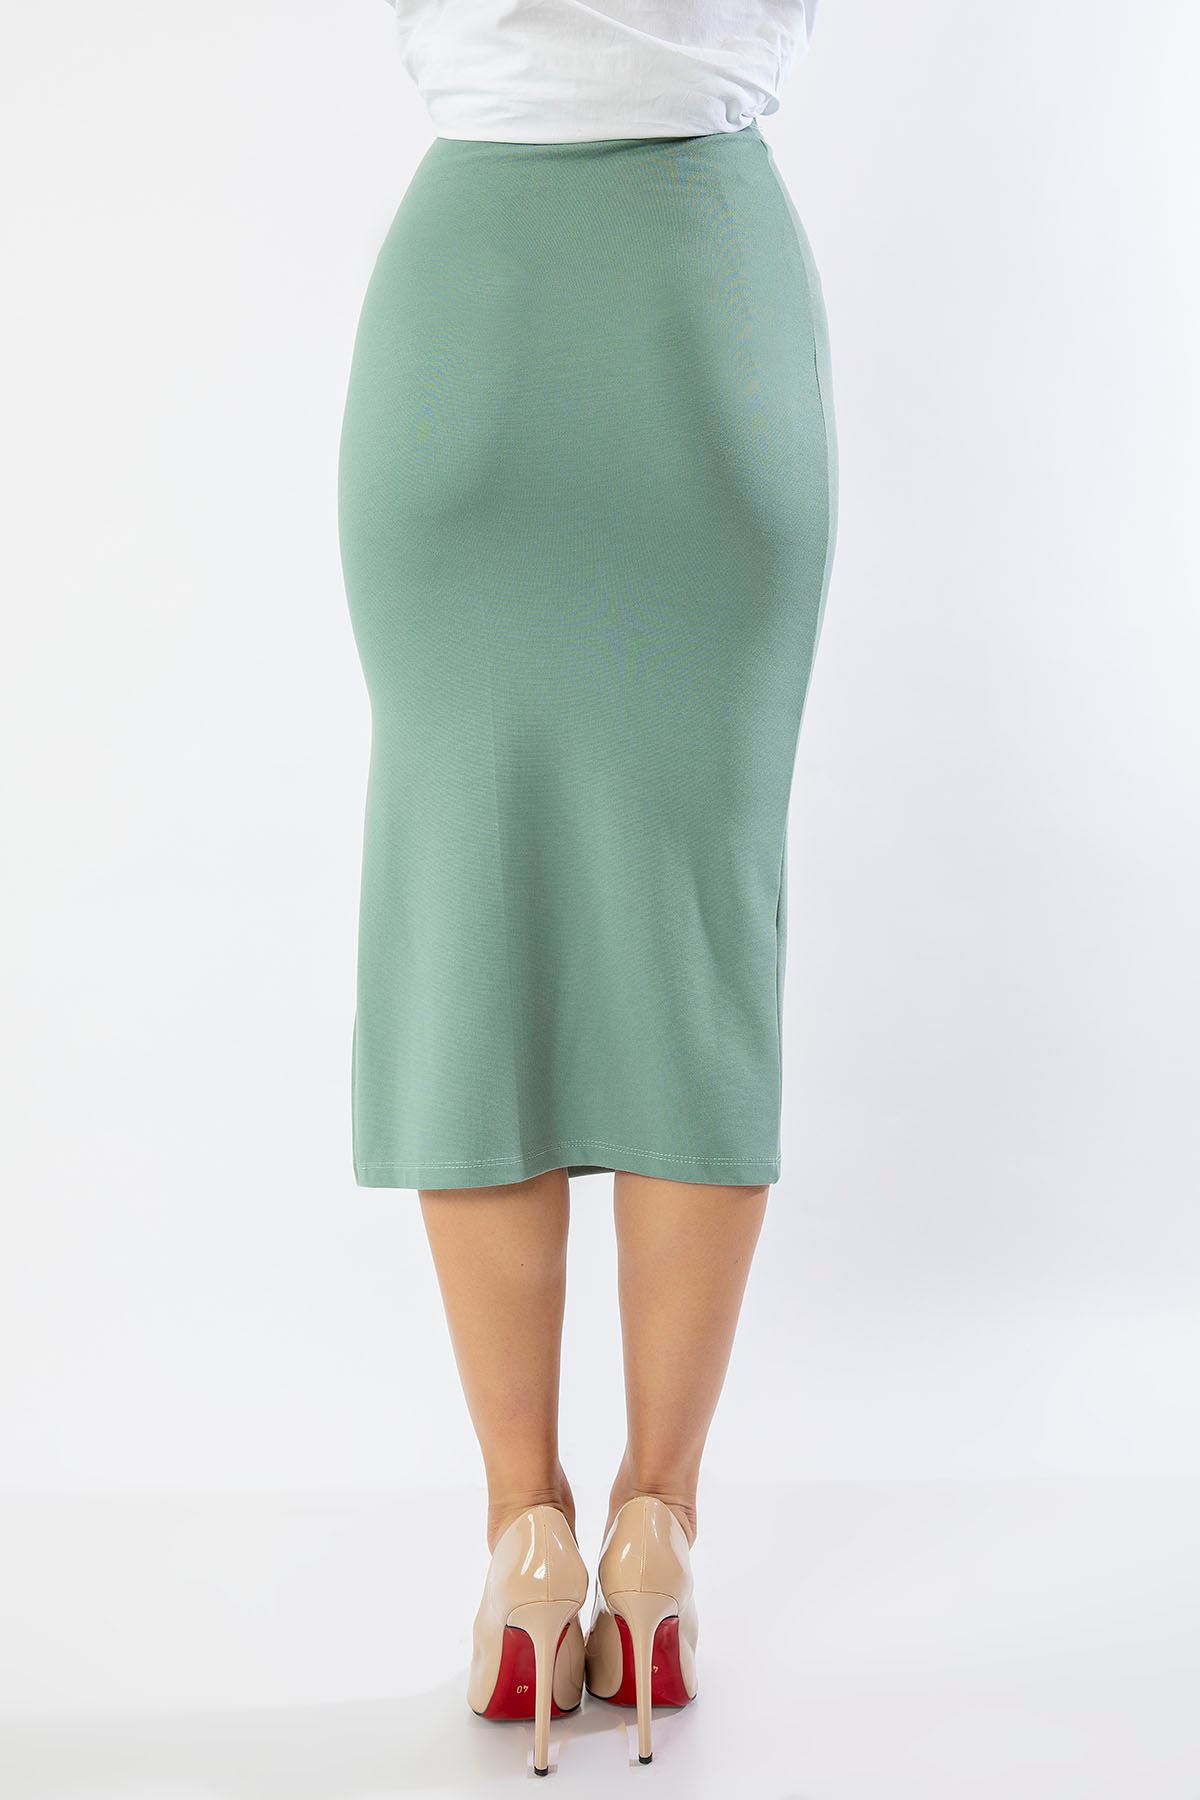 Knit Fabric 3/4 Short Tight Fit Slit Skirt - Mint